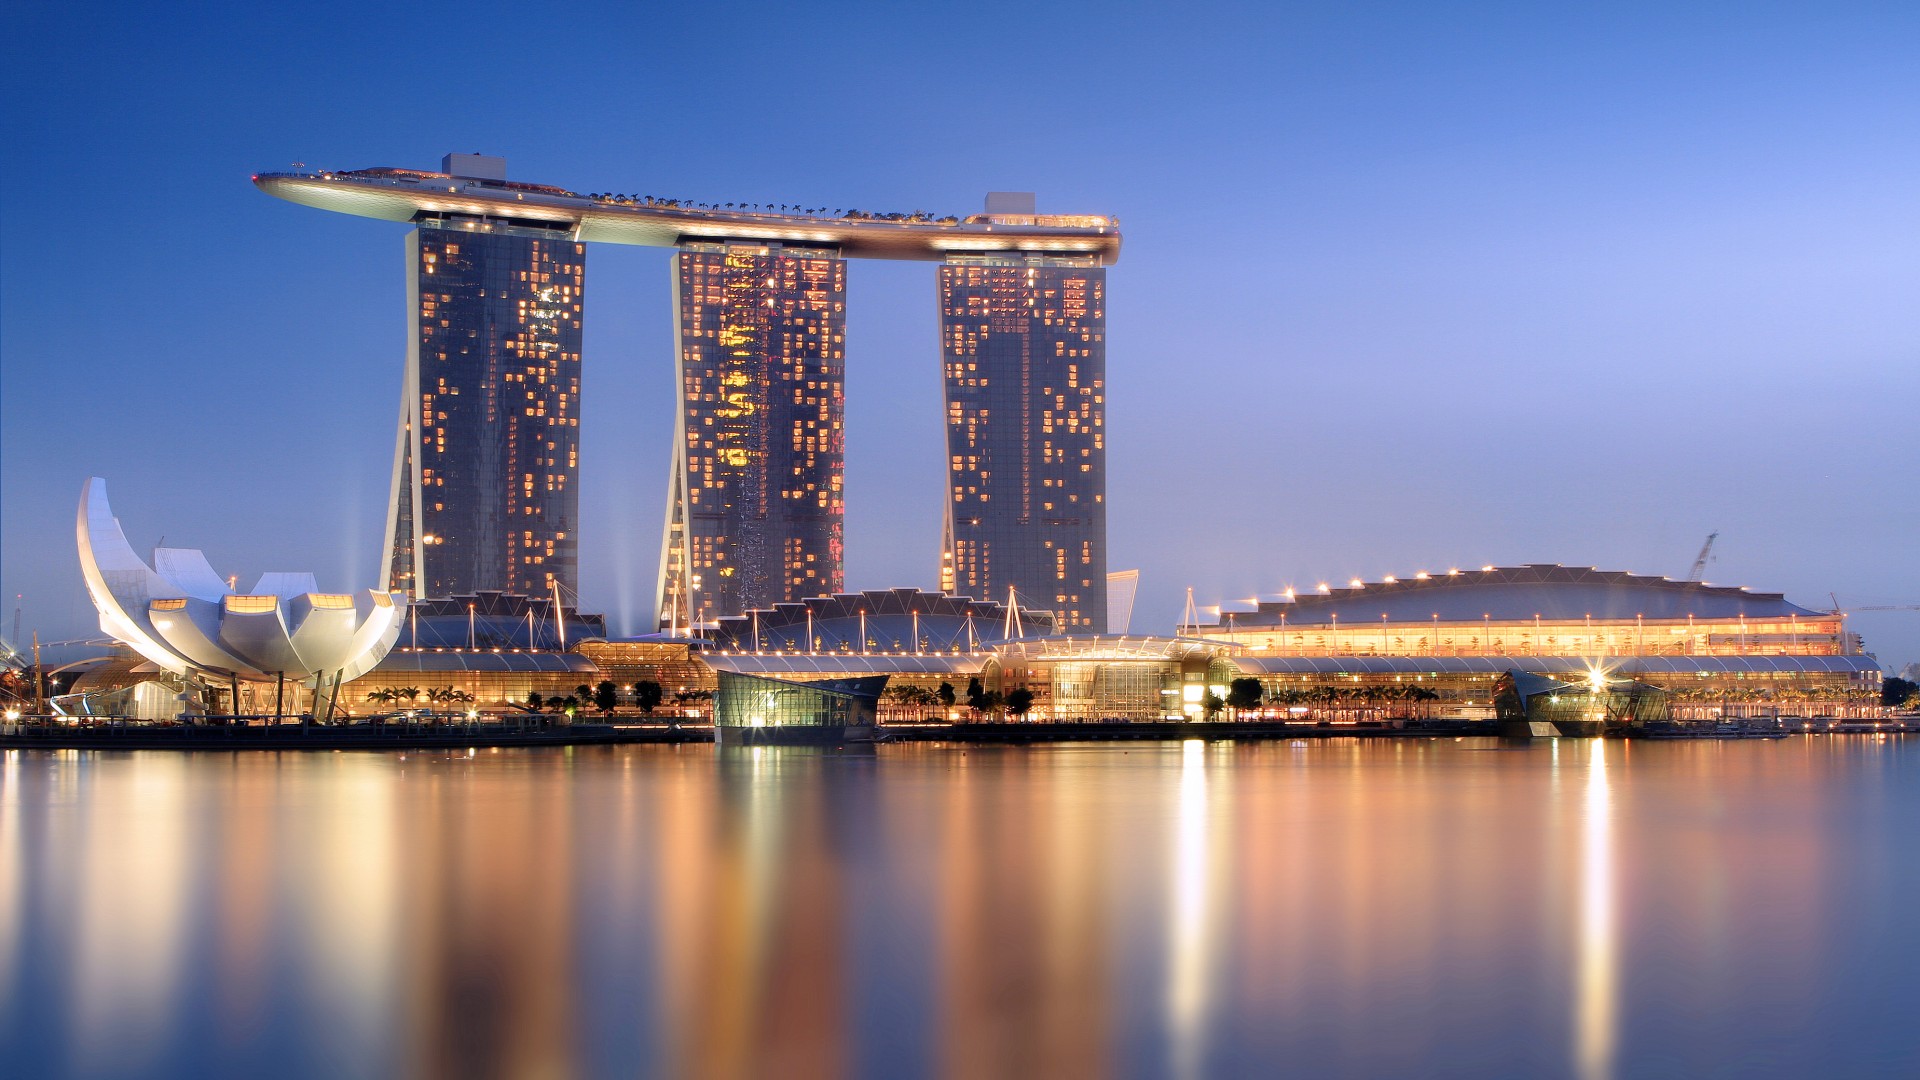 Marina Bay Sands, hotel, travel, booking, pool, casino, Singapore (horizontal)